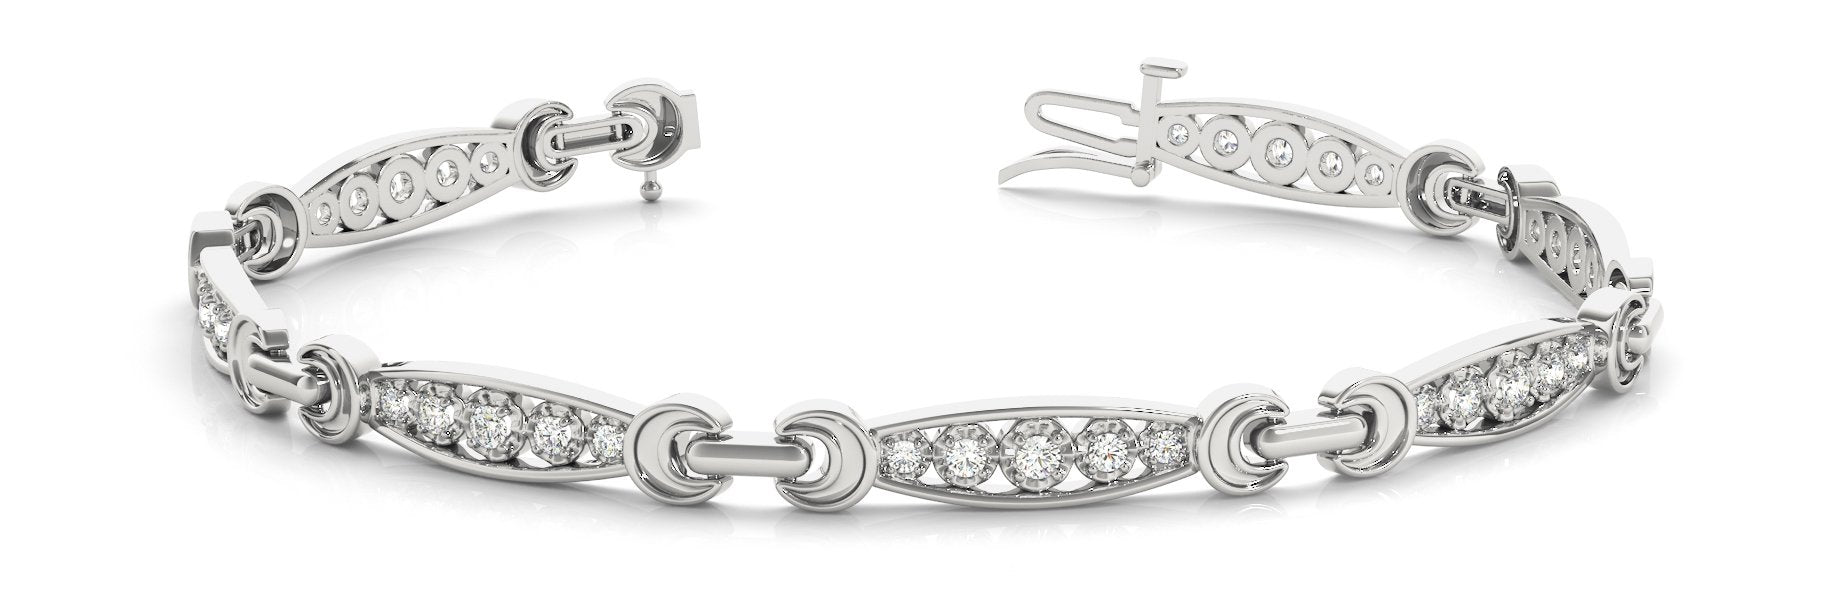 Fancy Diamond Bracelet Ladies 0.33ct tw - 14kt White Gold